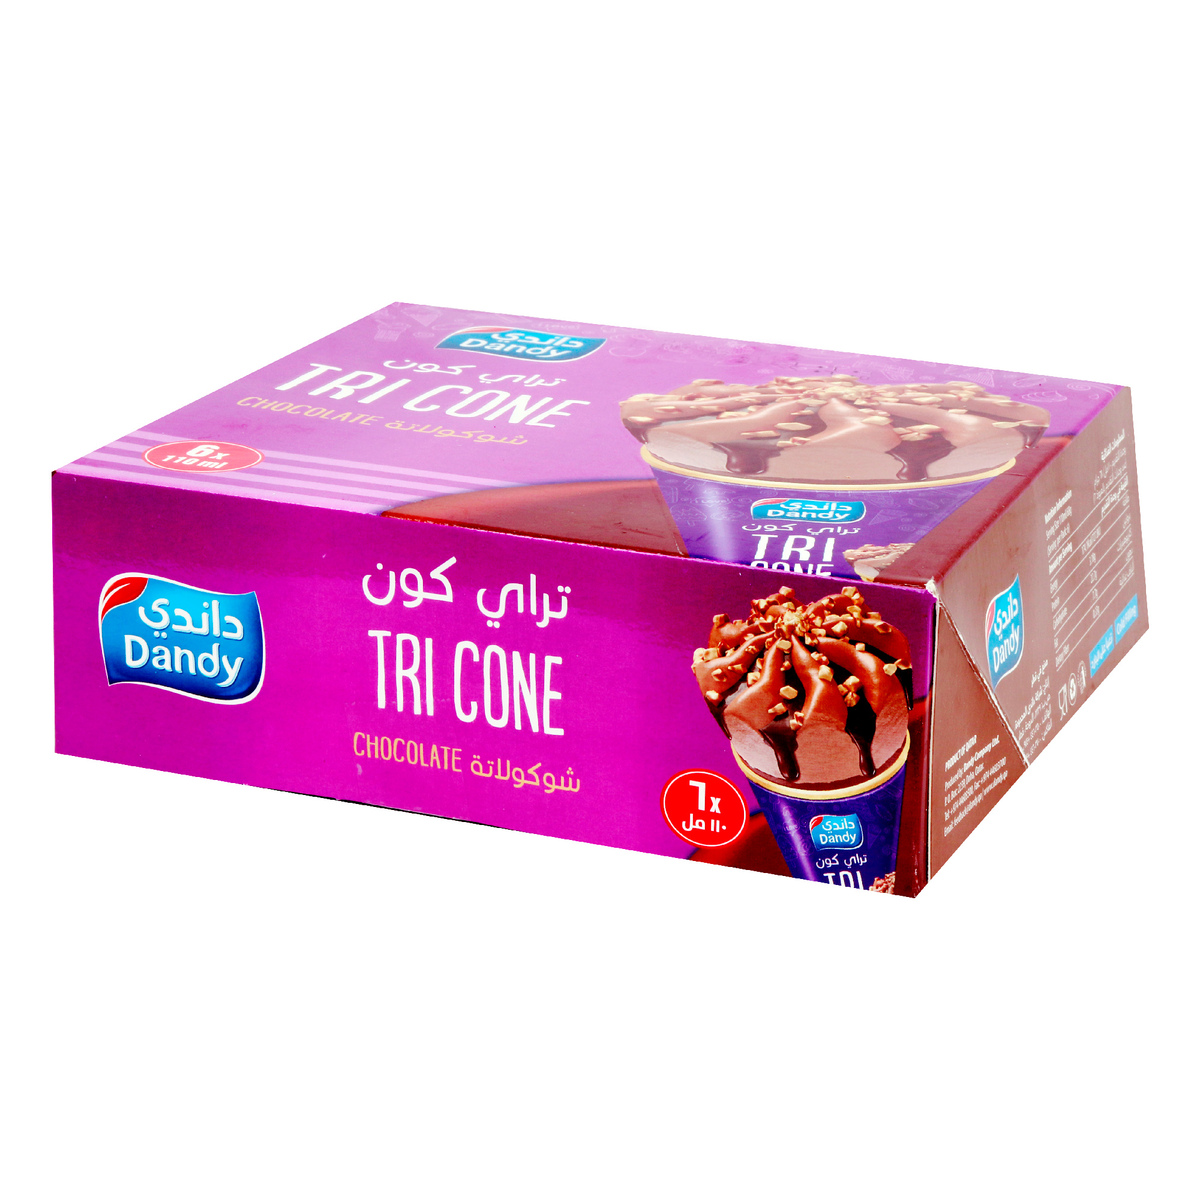 Dandy Ice Cream Tri Cone Chocolate 6 x 110ml